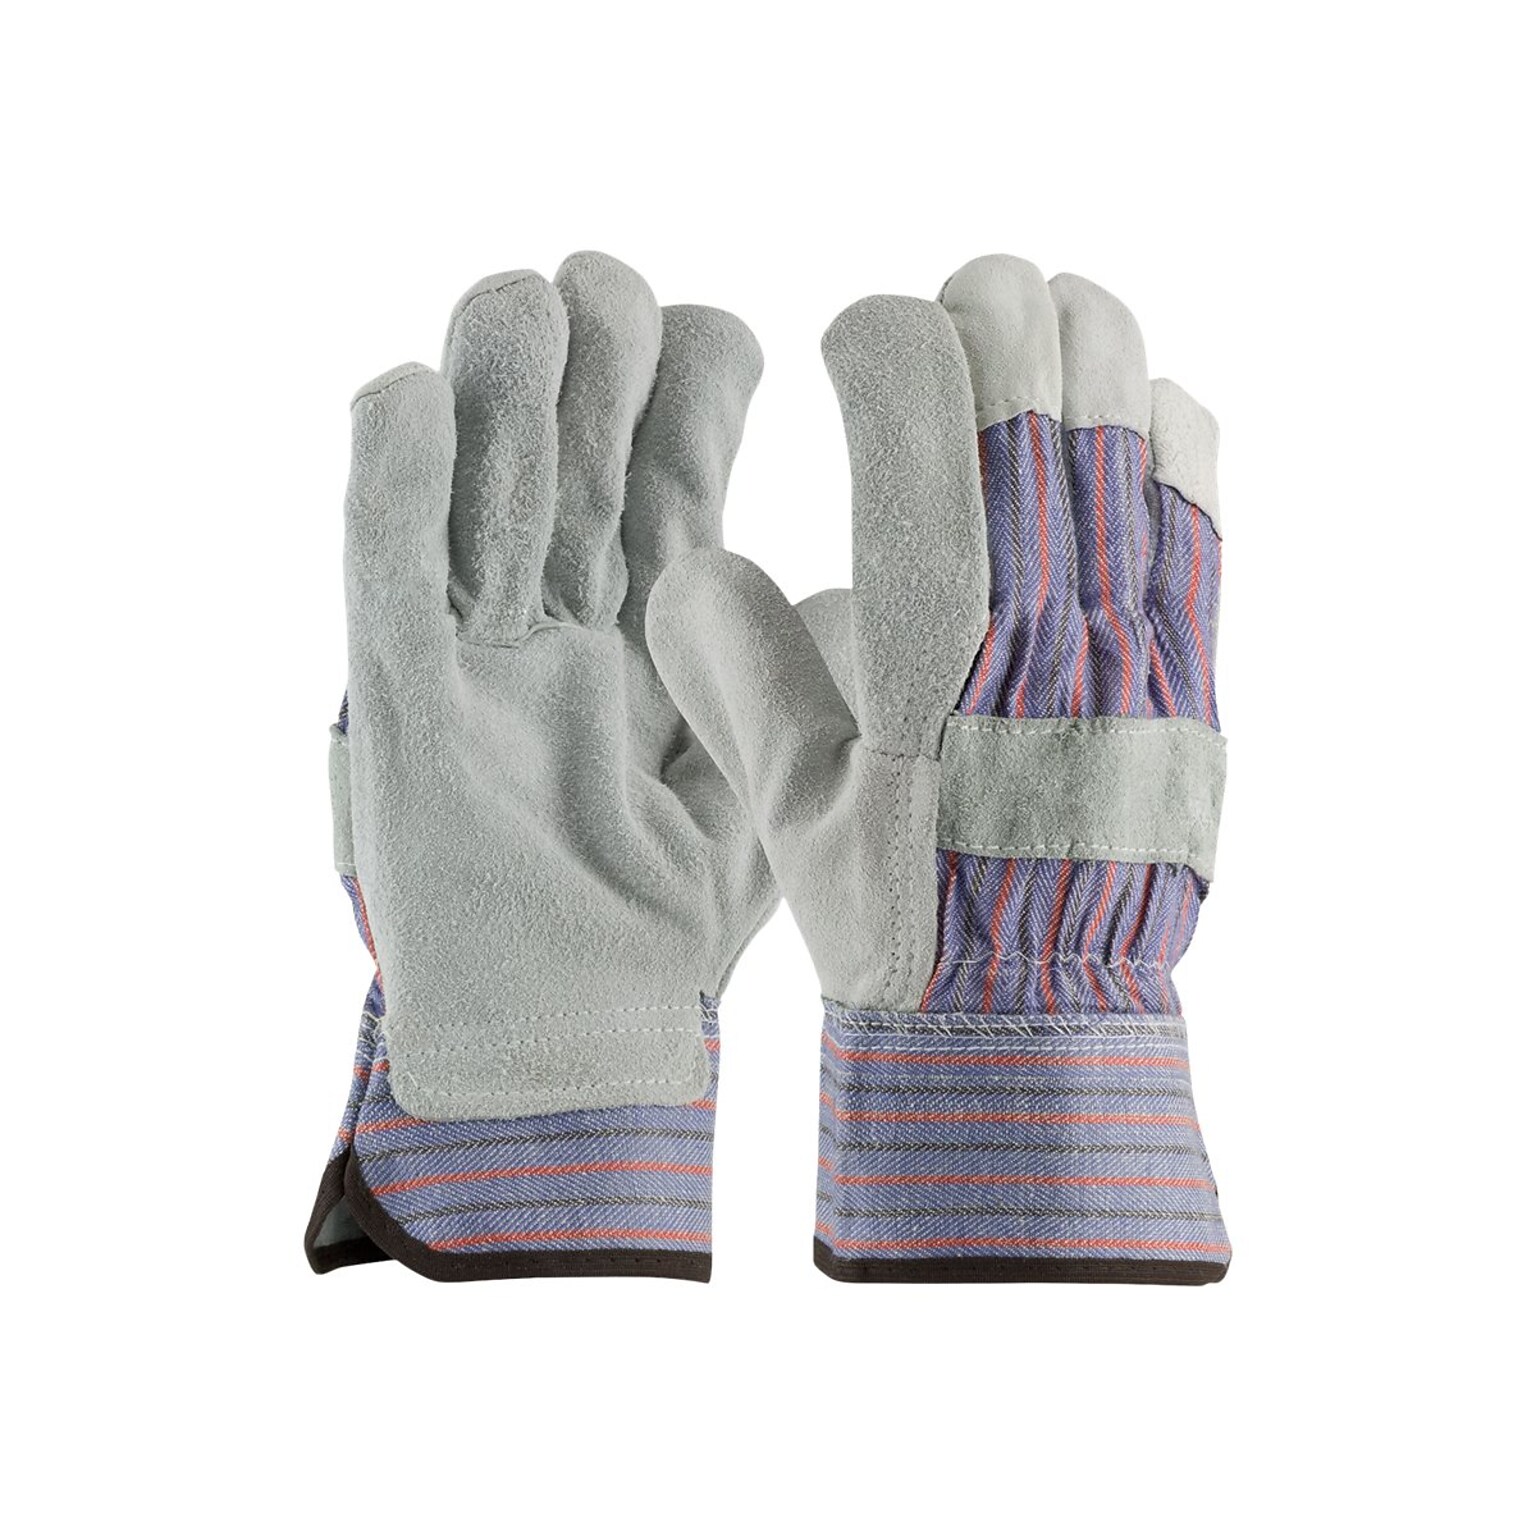 PIP Economy Grade Split Cowhide Leather Palm Glove, Large (84-7532/L)